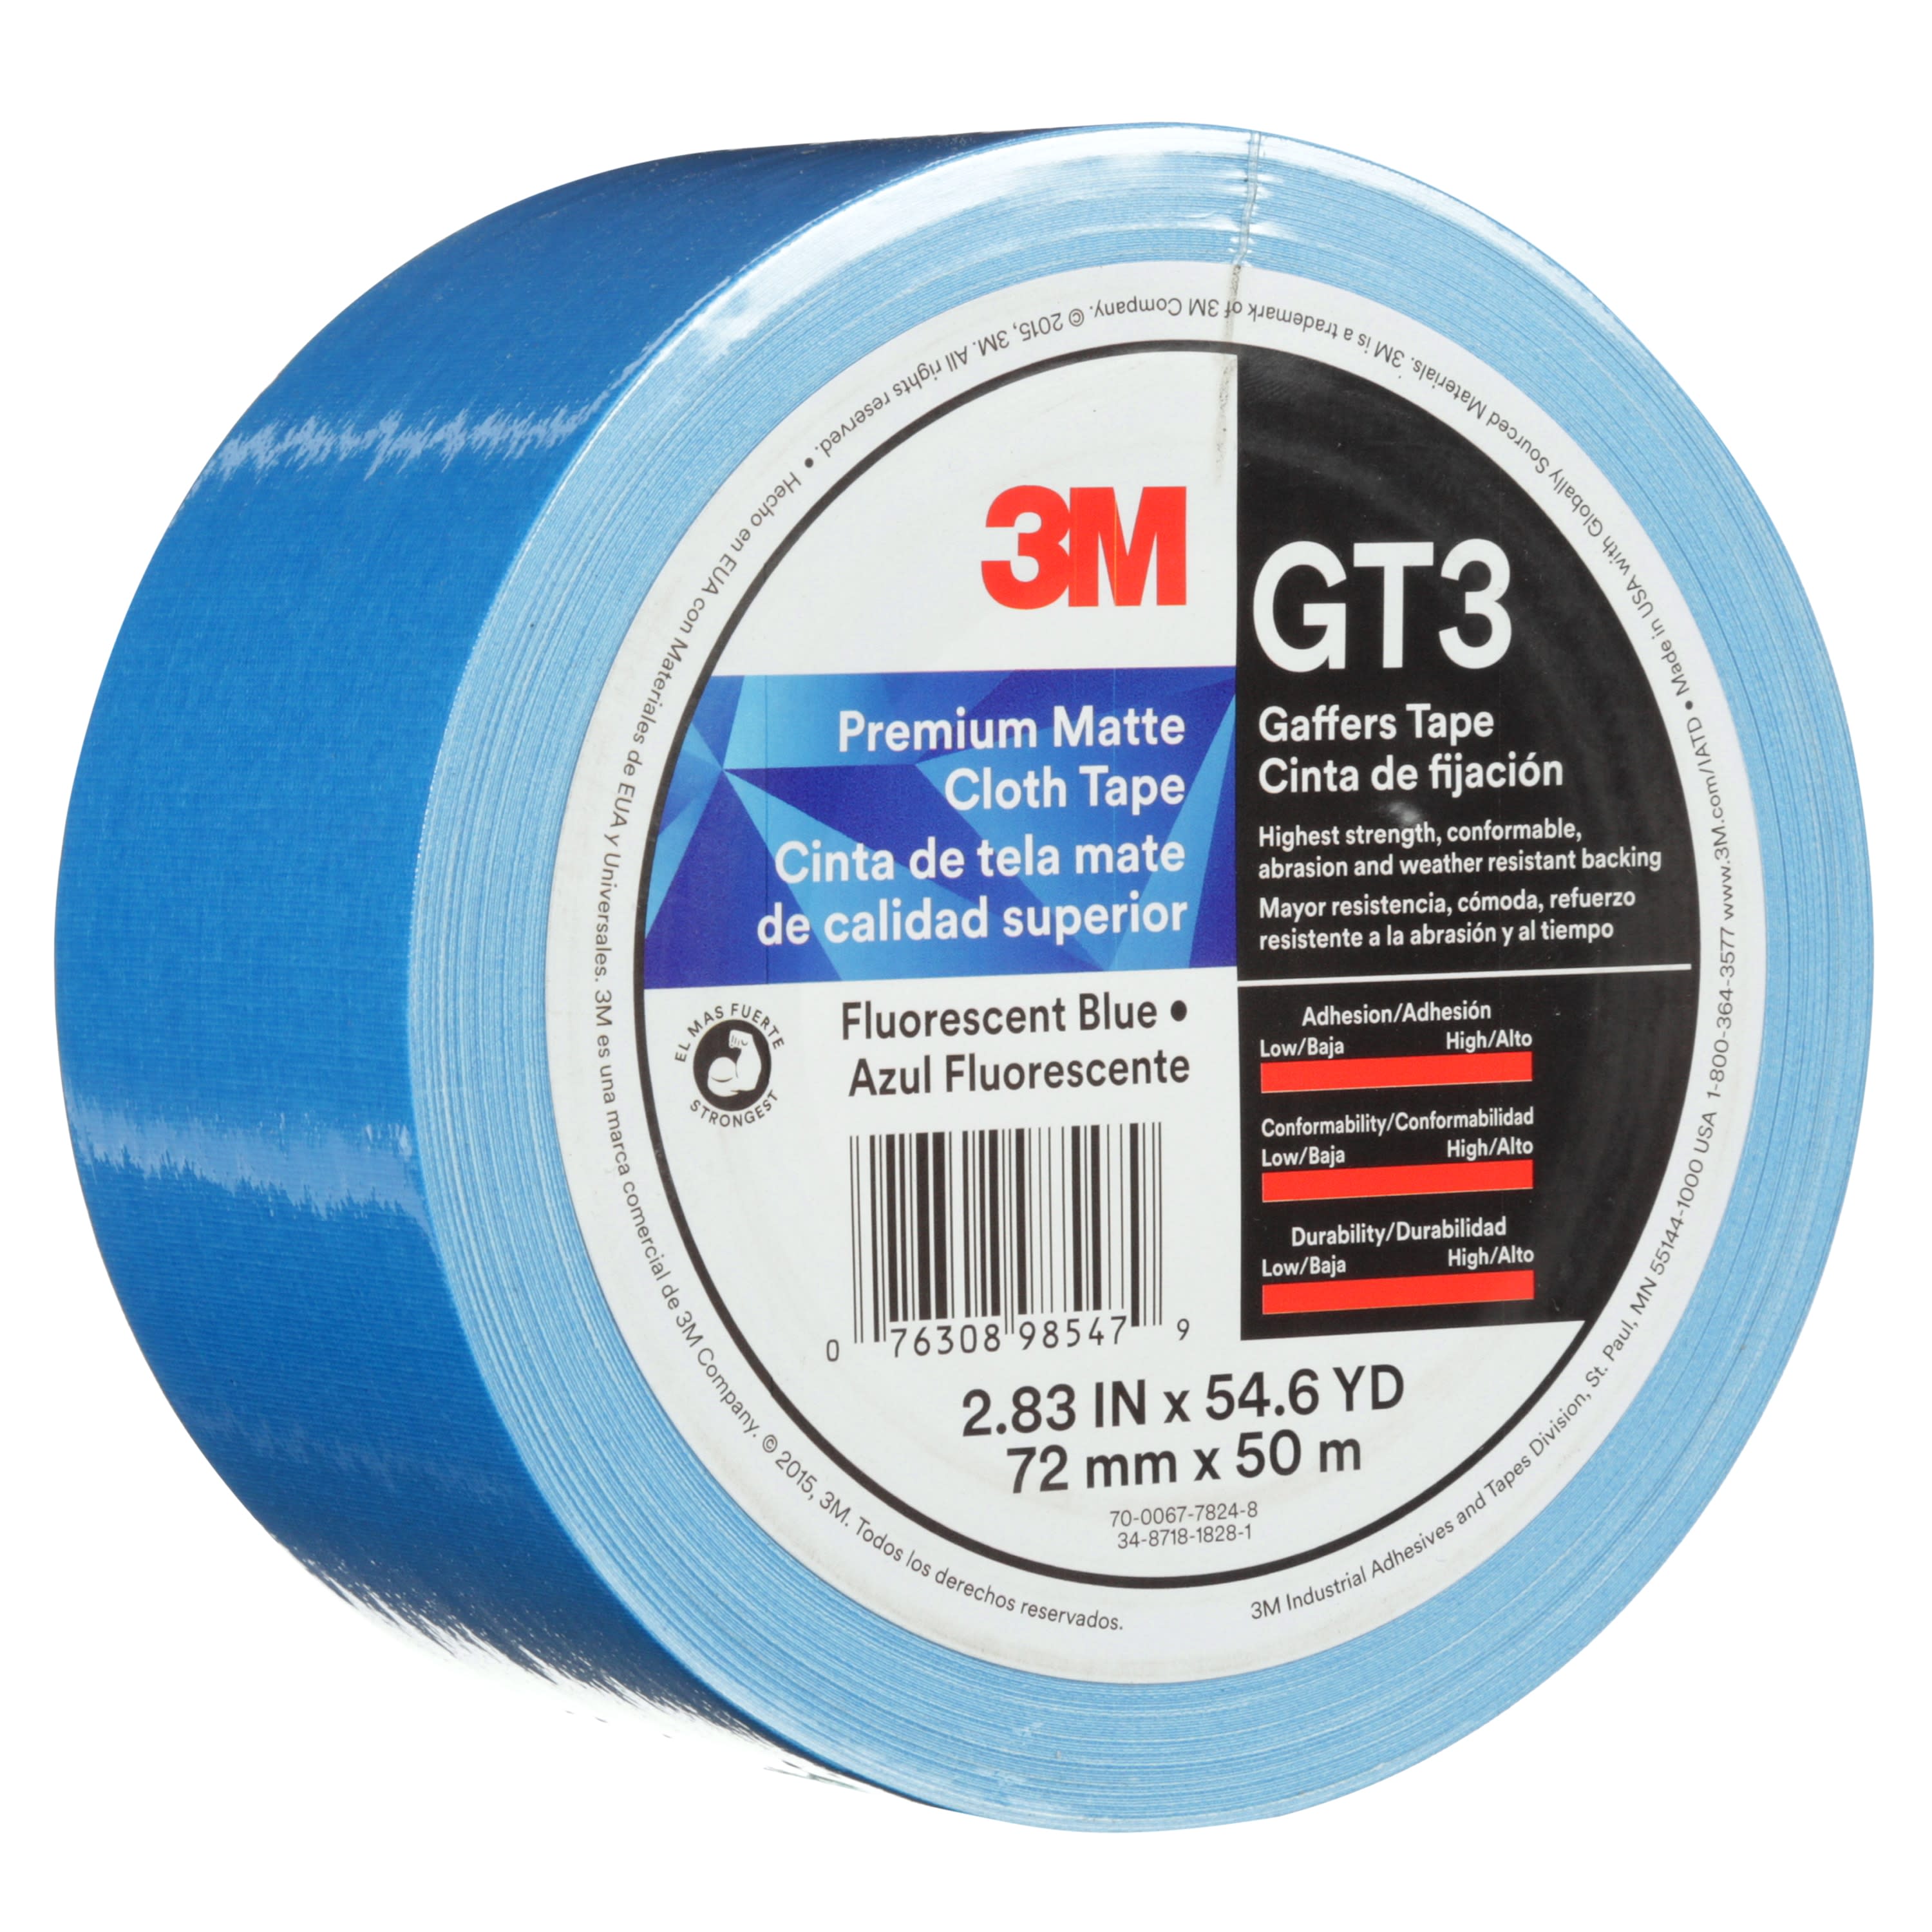 3M™ Premium Matte Cloth (Gaffers) Tape GT3, Fluorescent Blue, 72 mm x 50
m, 11 mil, 16 per case